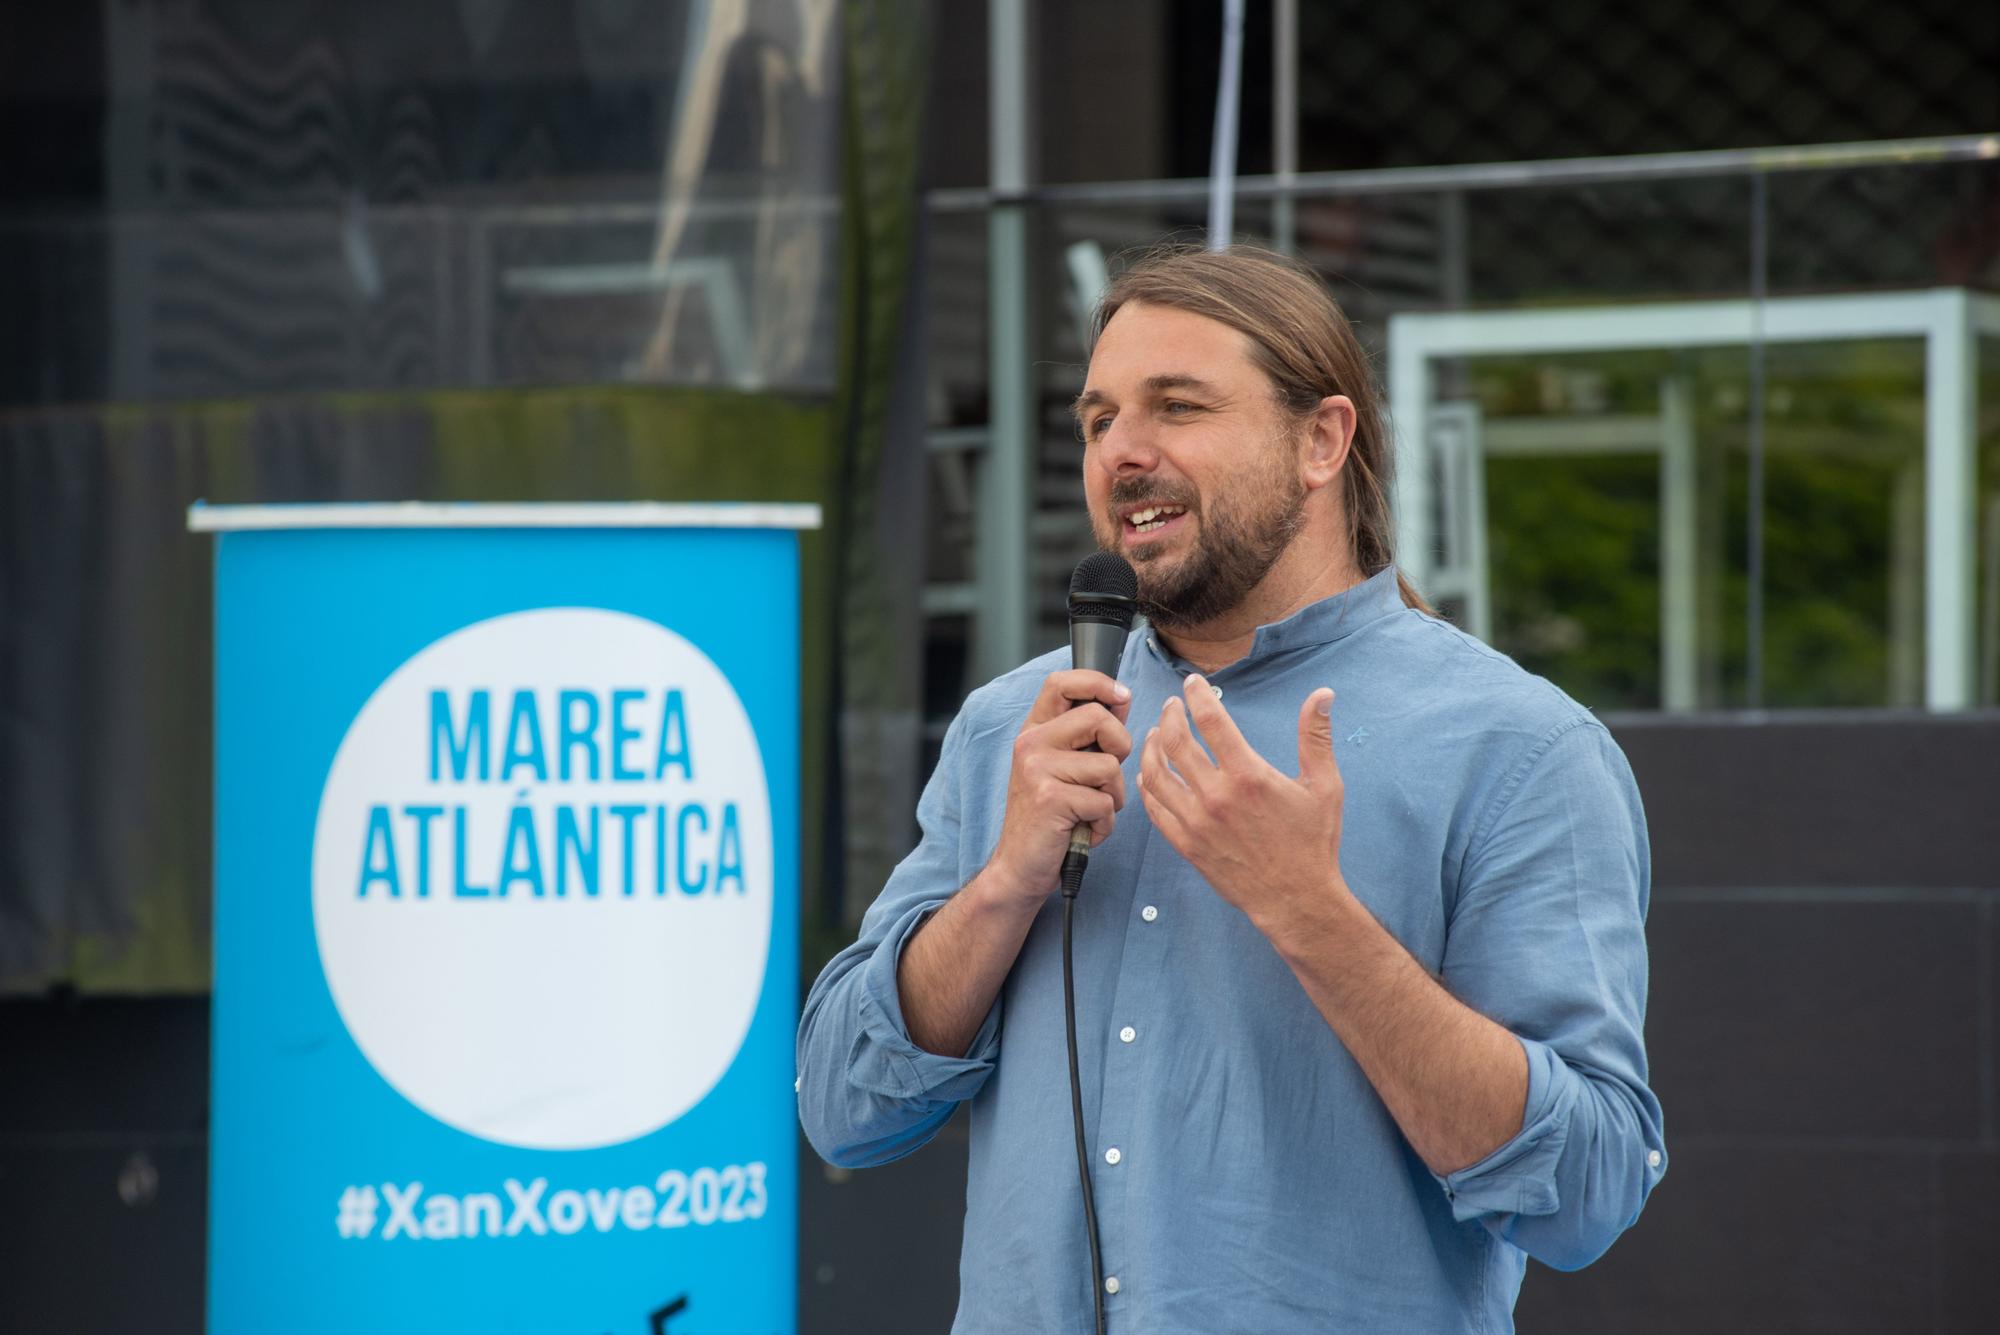 Elecciones municipales A Coruña: acto de Marea Atlántica en As Conchiñas